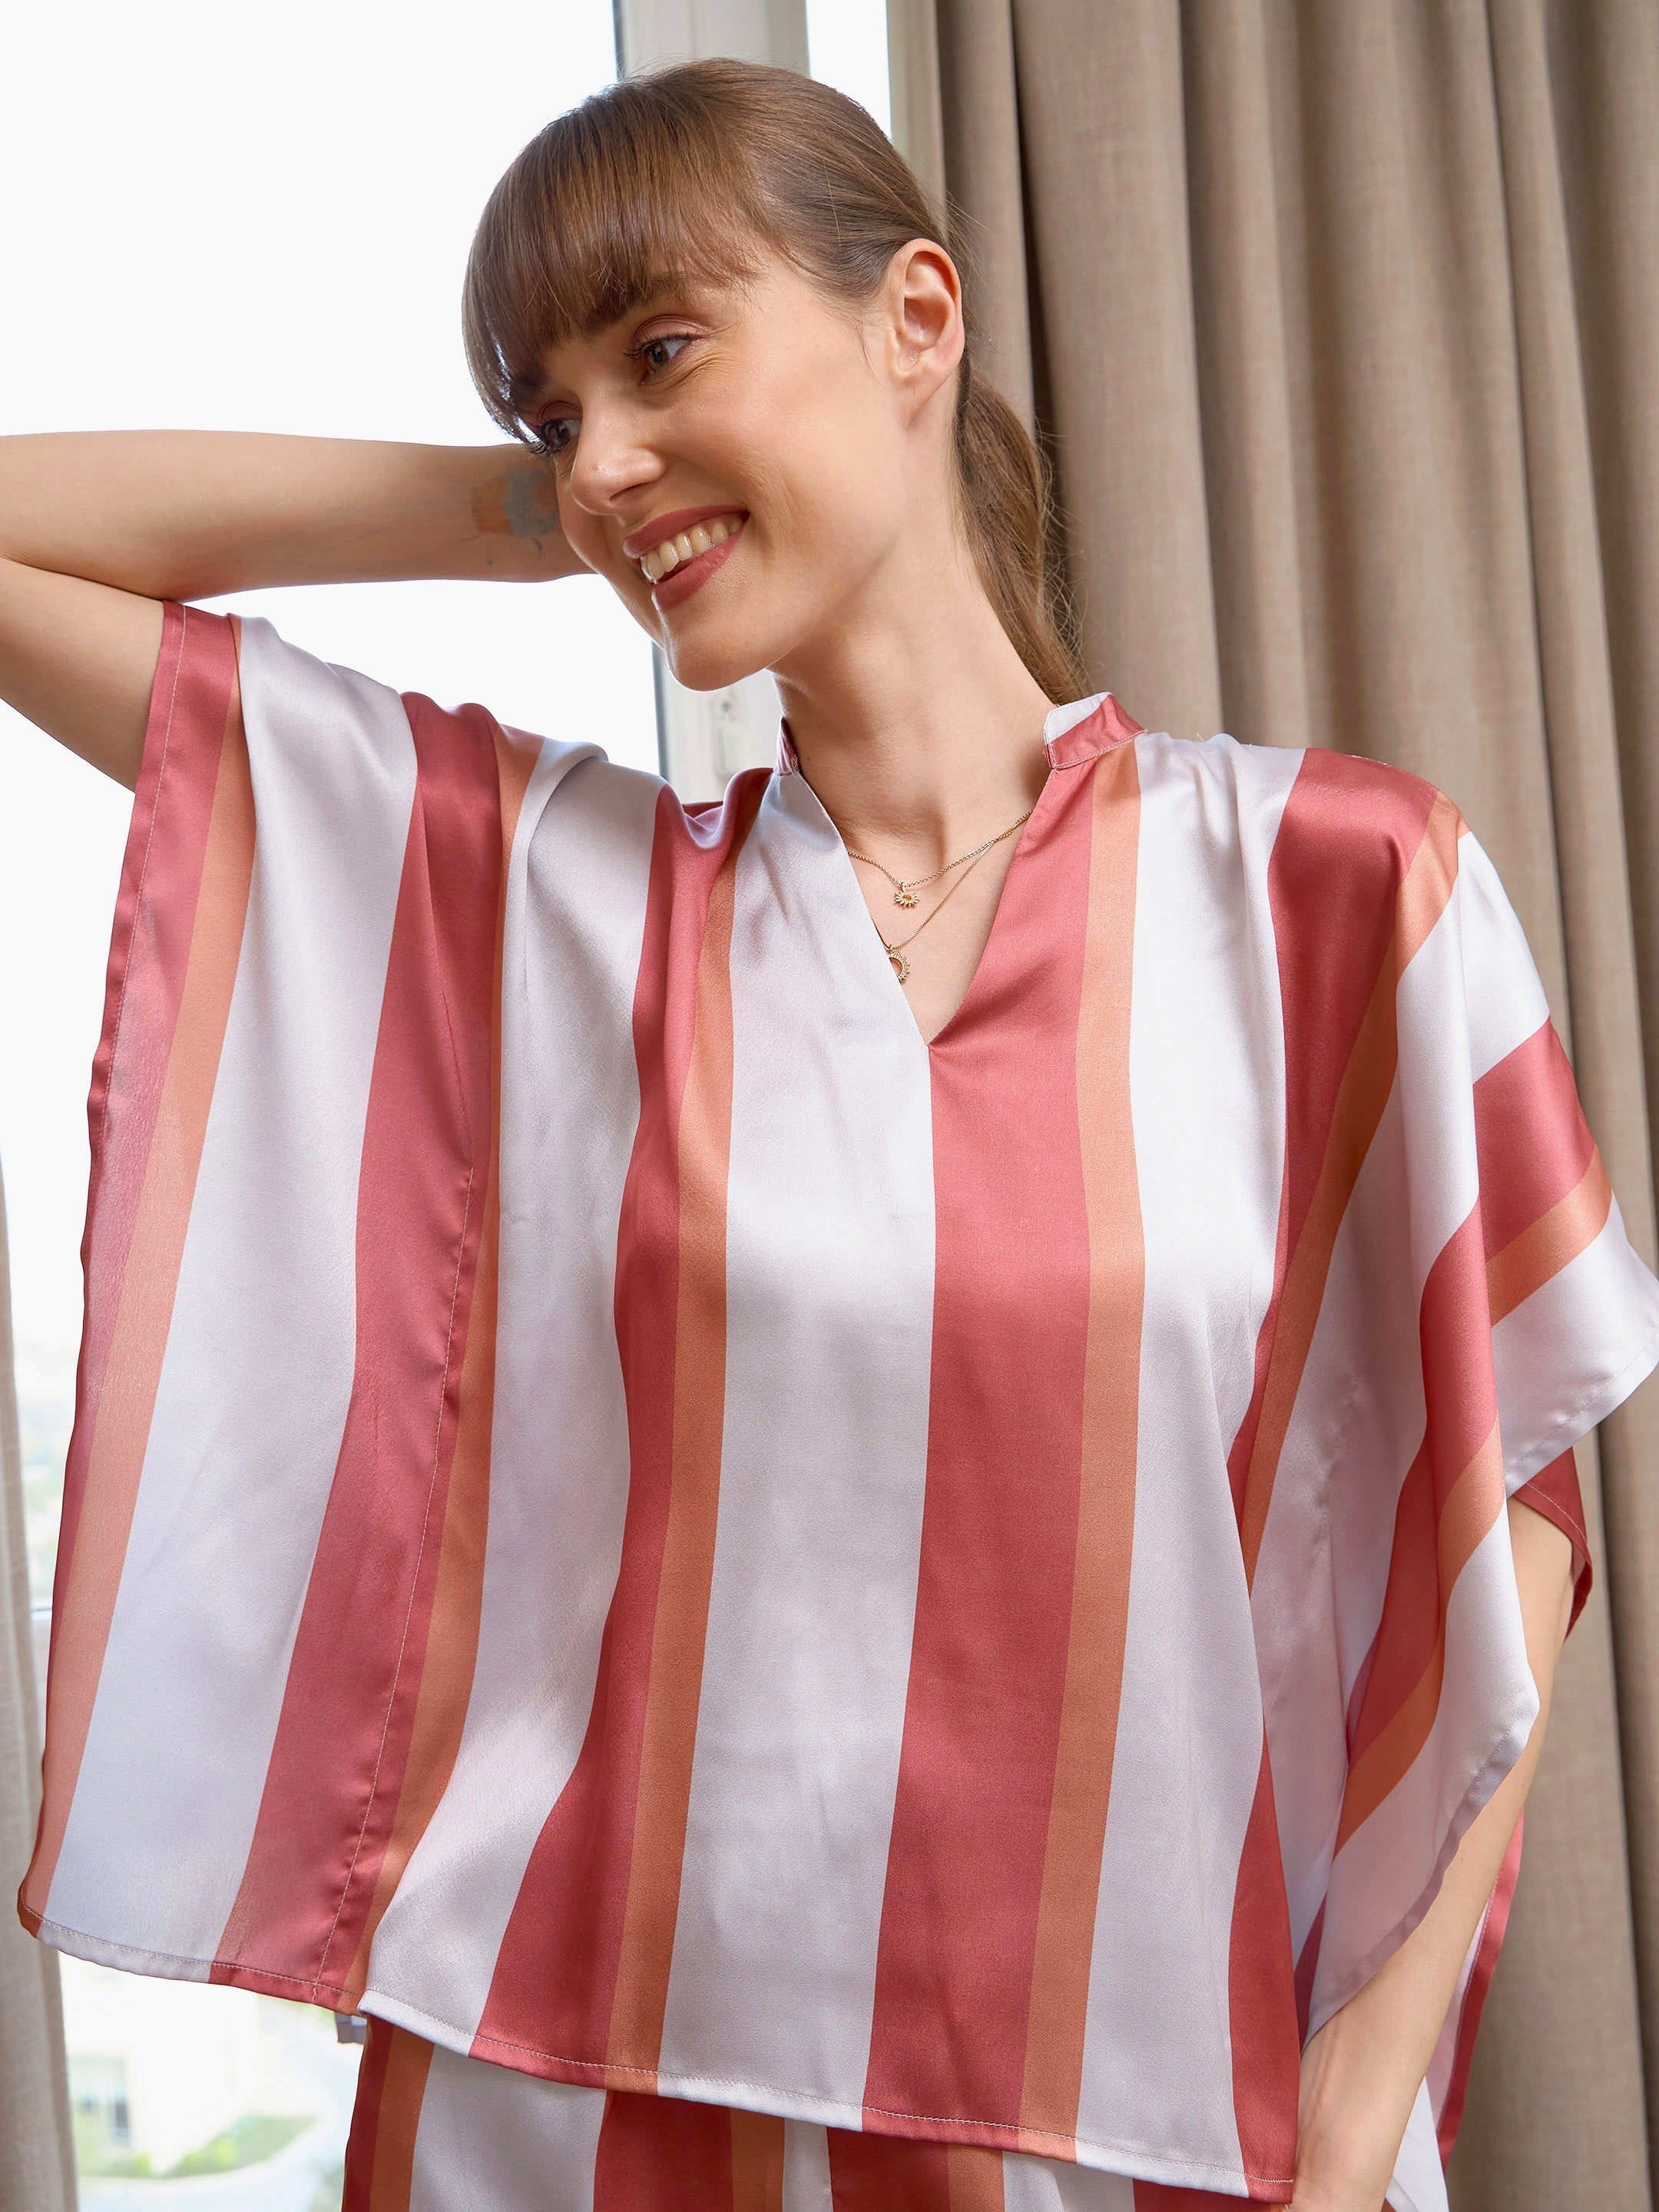 Women's Coral Satin Stripe Kaftan Top With Lounge Pants - SASSAFRAS